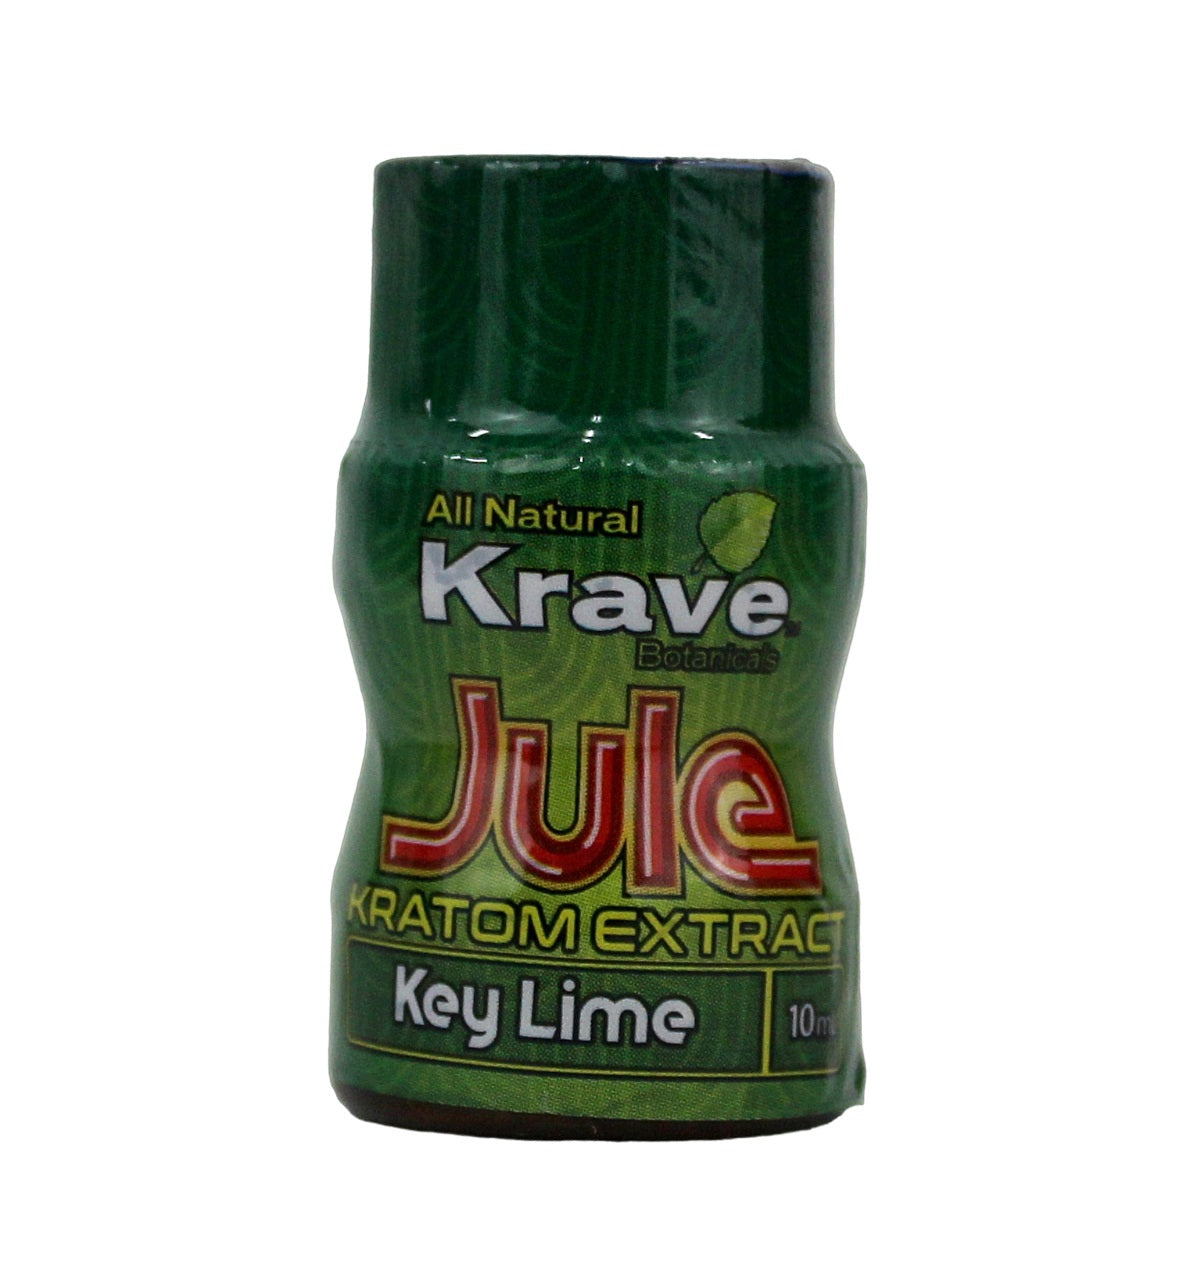 24ct Krave Jule Kratom Extract Shot - Key Lime